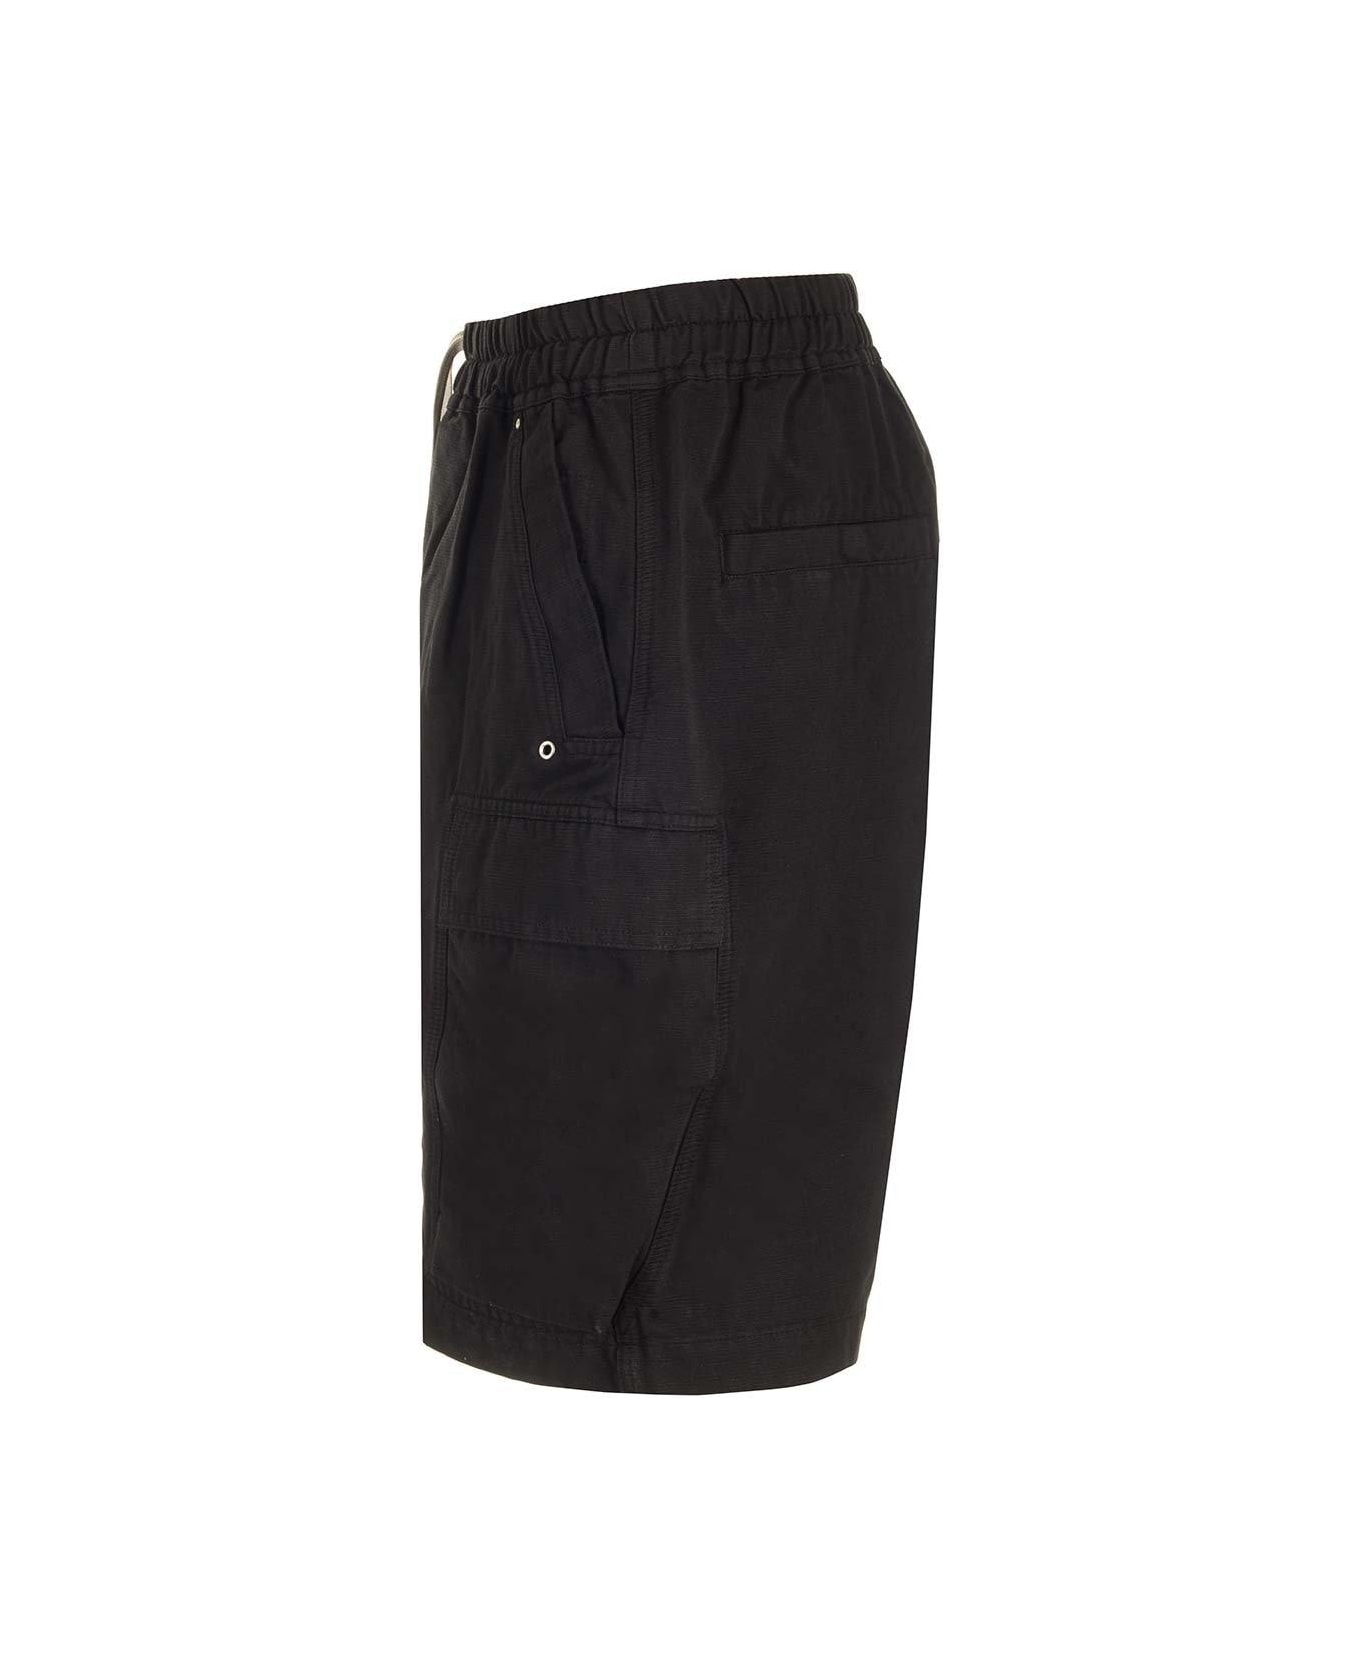 DRKSHDW Drawstring Zipped Shorts - BLACK